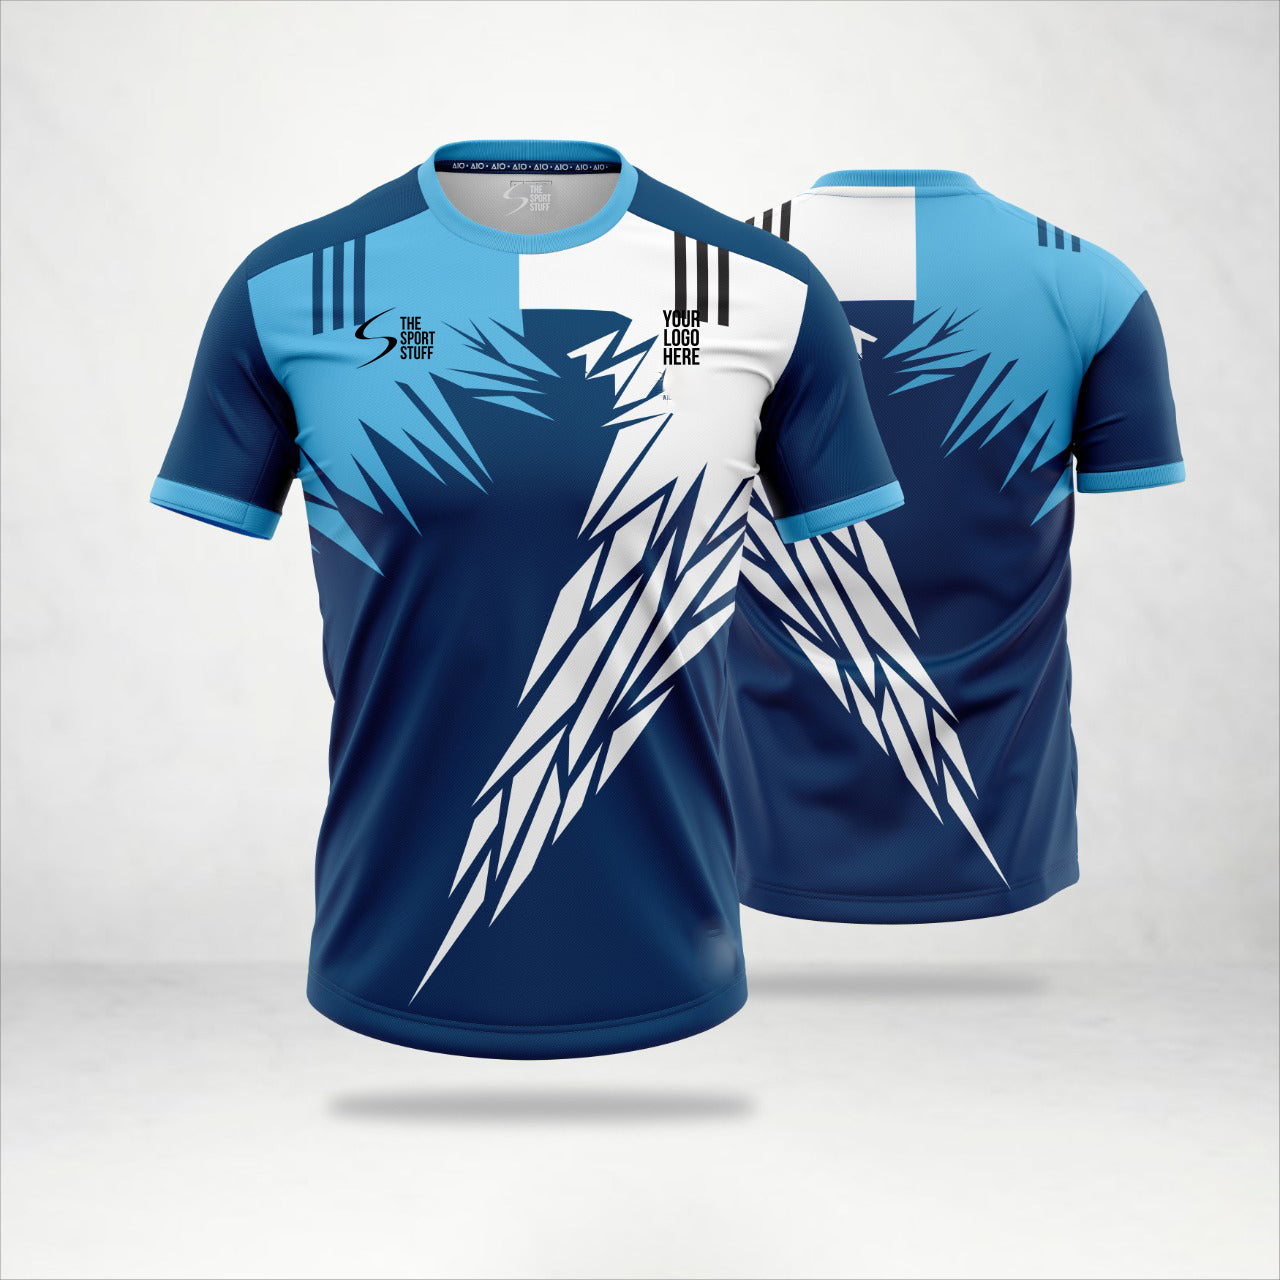 Schrikken Hover vinger Sword Customized Football Team Jersey Design | Customized Football Jerseys  Online India - TheSportStuff